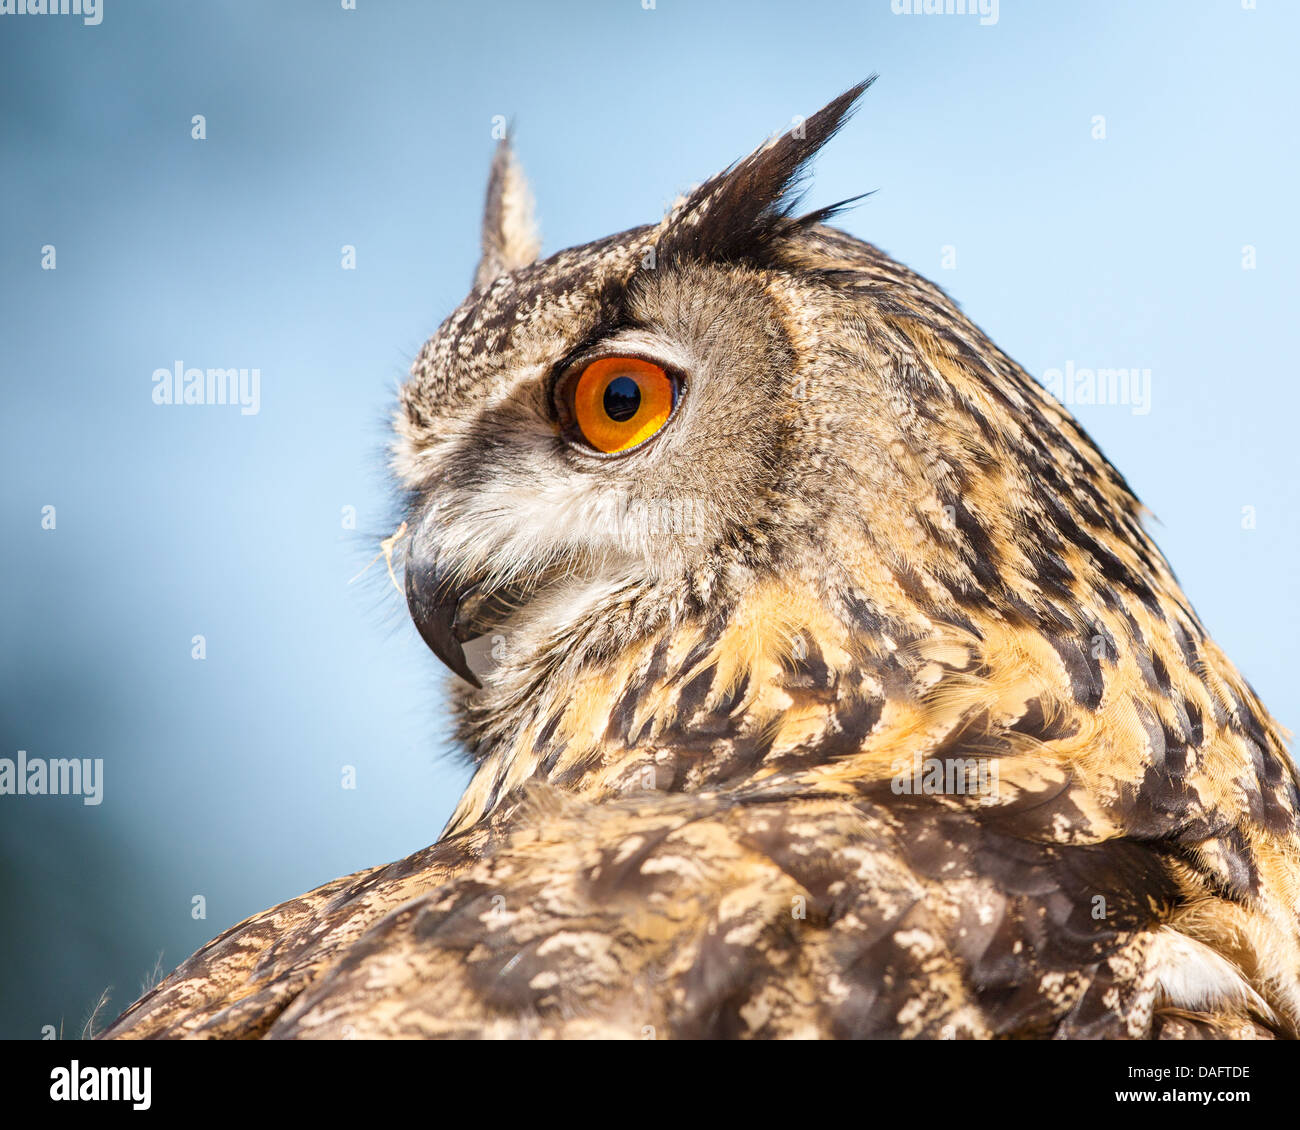 Close-up de un águila Euroasiática- owl (Bubo bubo) mostrando la cabeza girada 180 grados contra un fondo de Nubes y cielo azul Foto de stock